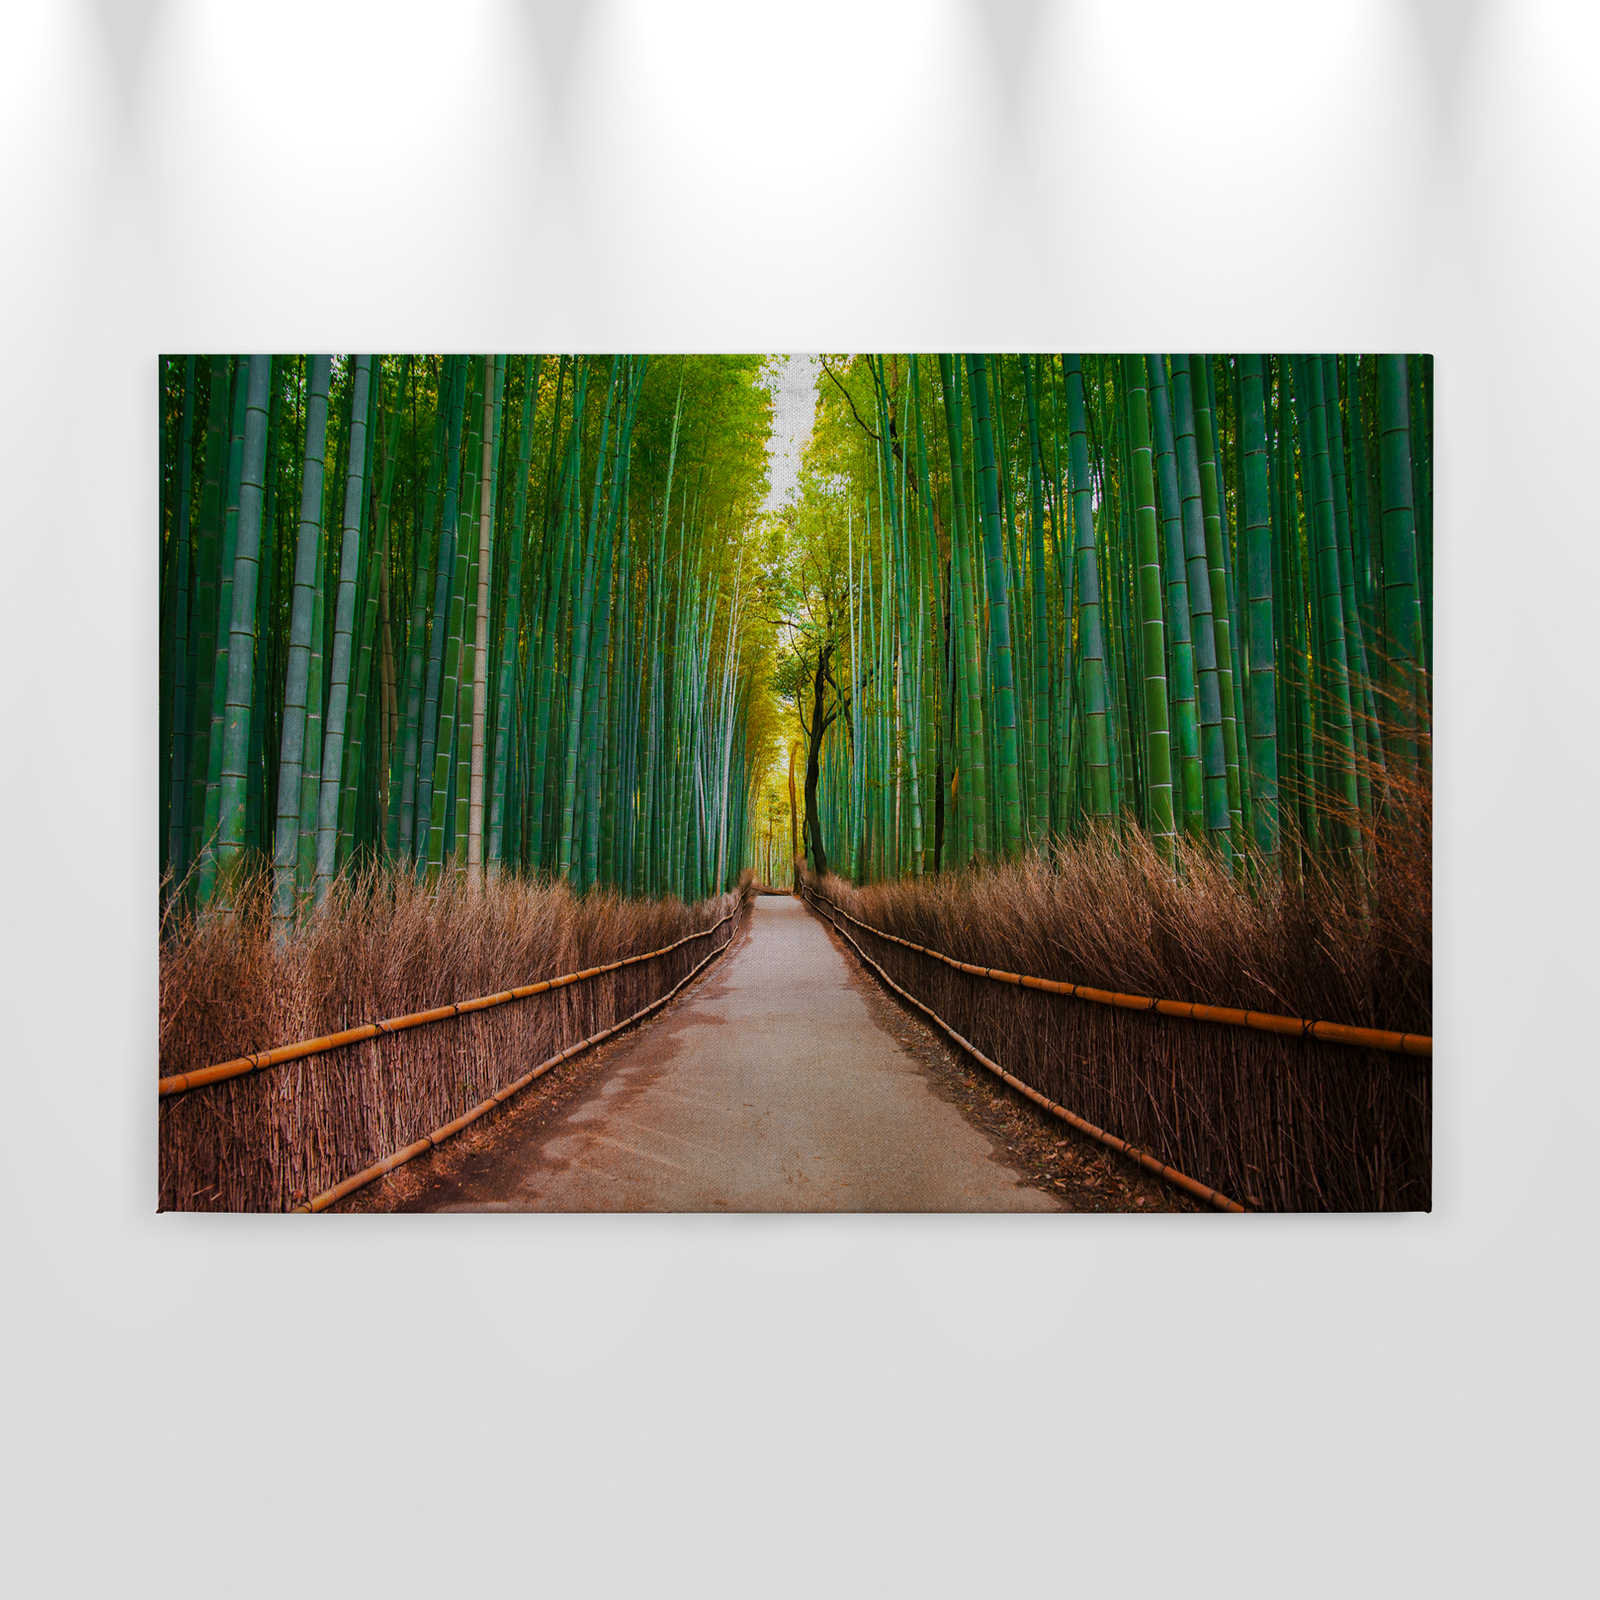             Leinwand mit natürlichem Bambusweg – 0,90 m x 0,60 m
        